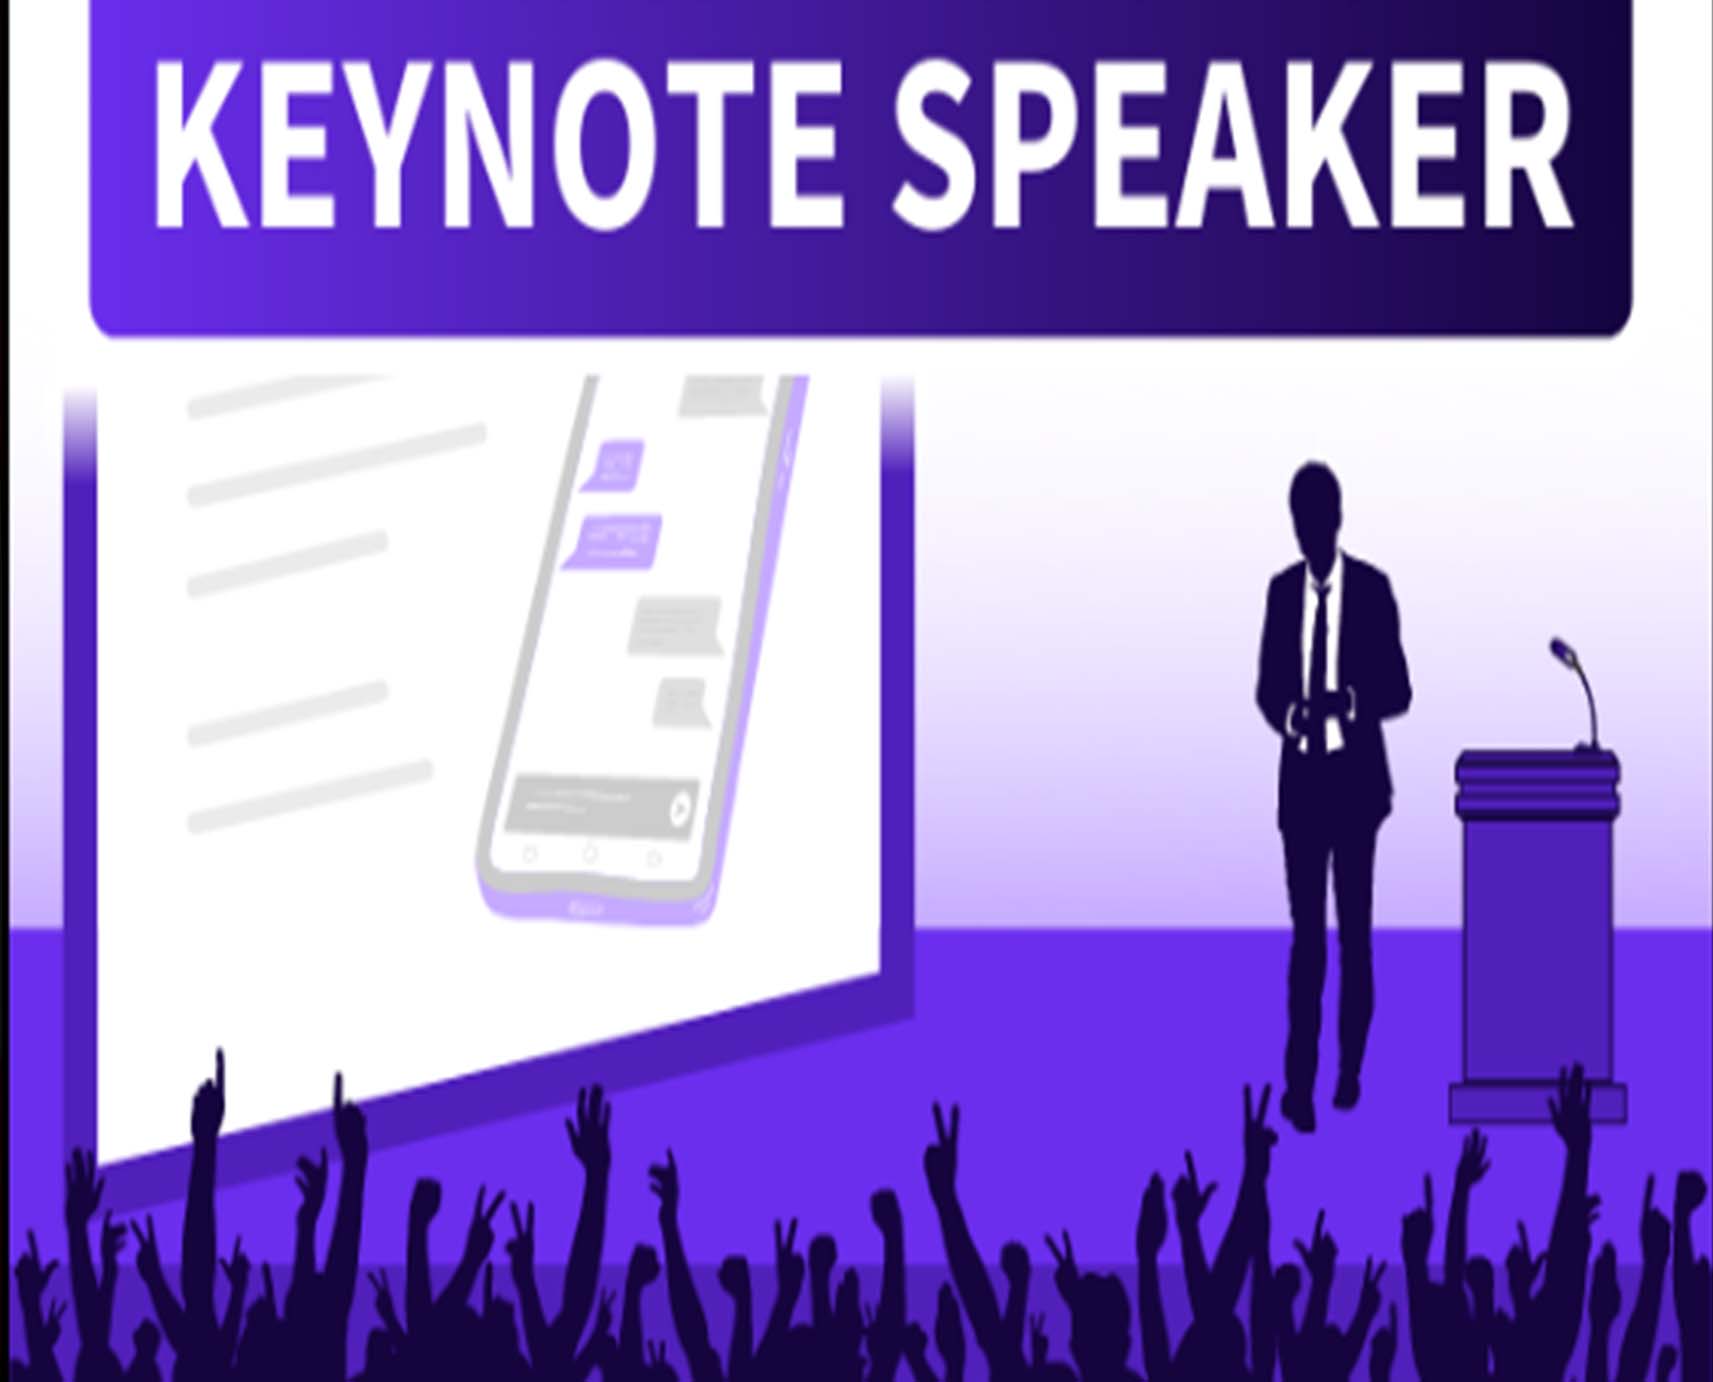 What Is a Keynote Speaker